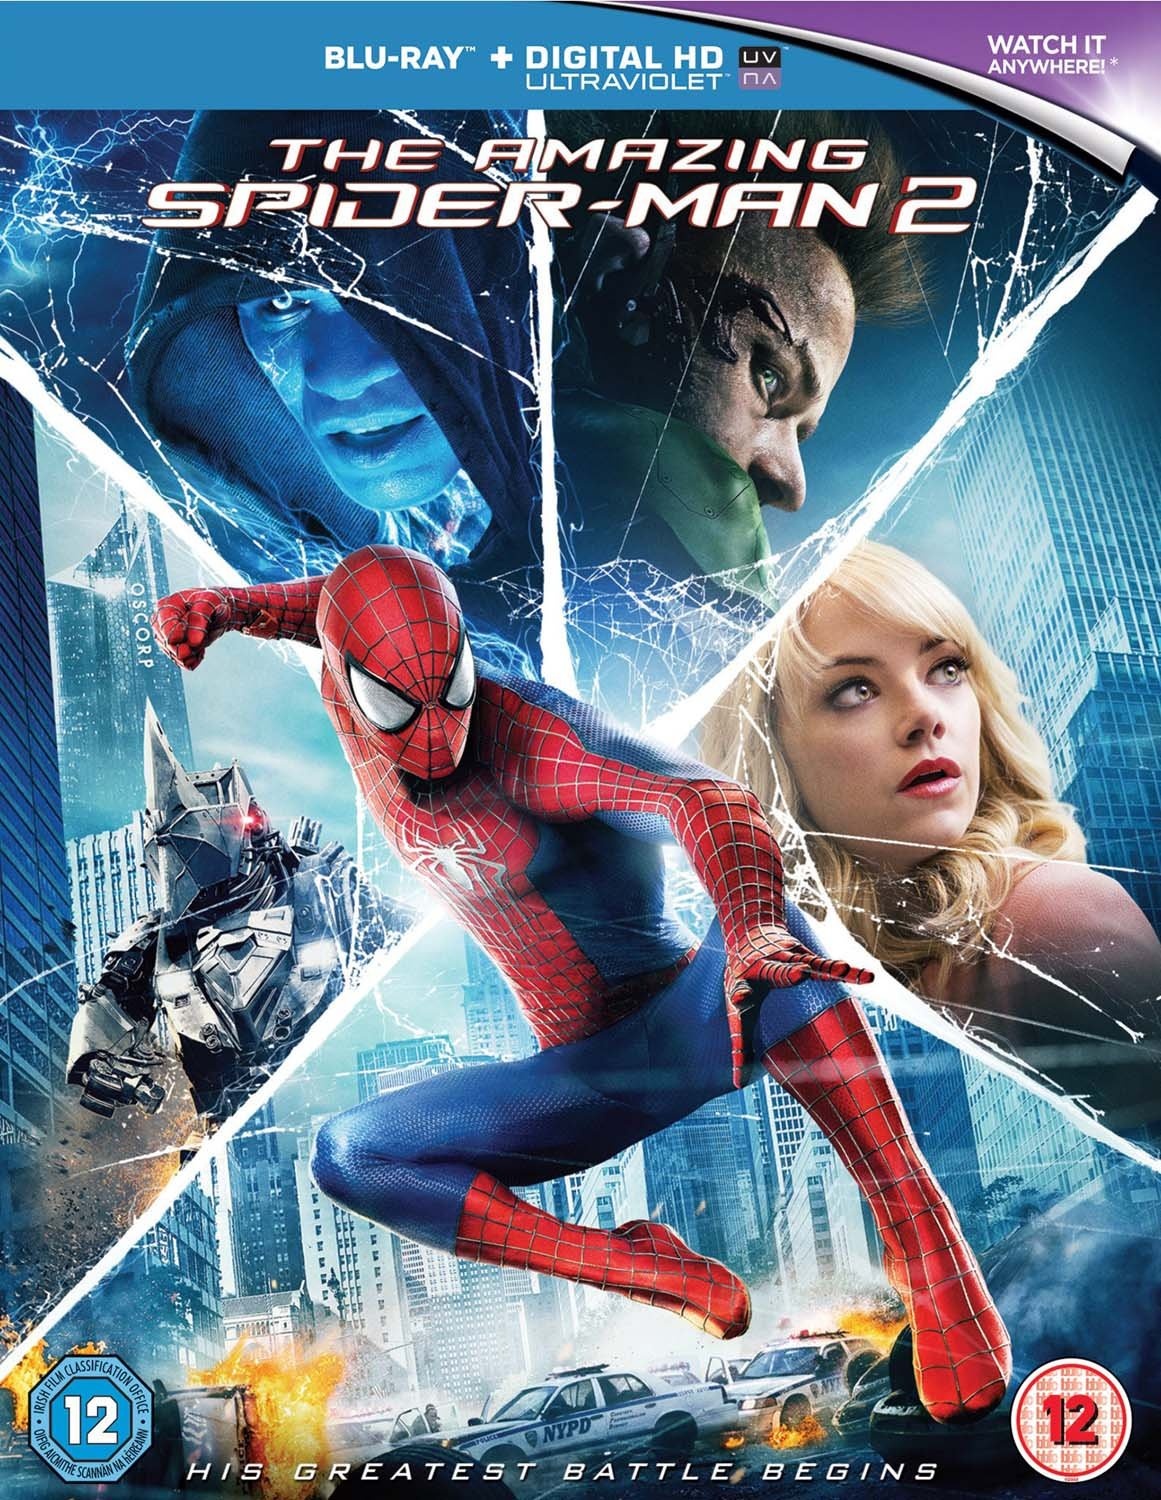 The Amazing Spider-Man 2 [Blu-ray] [UK Import]